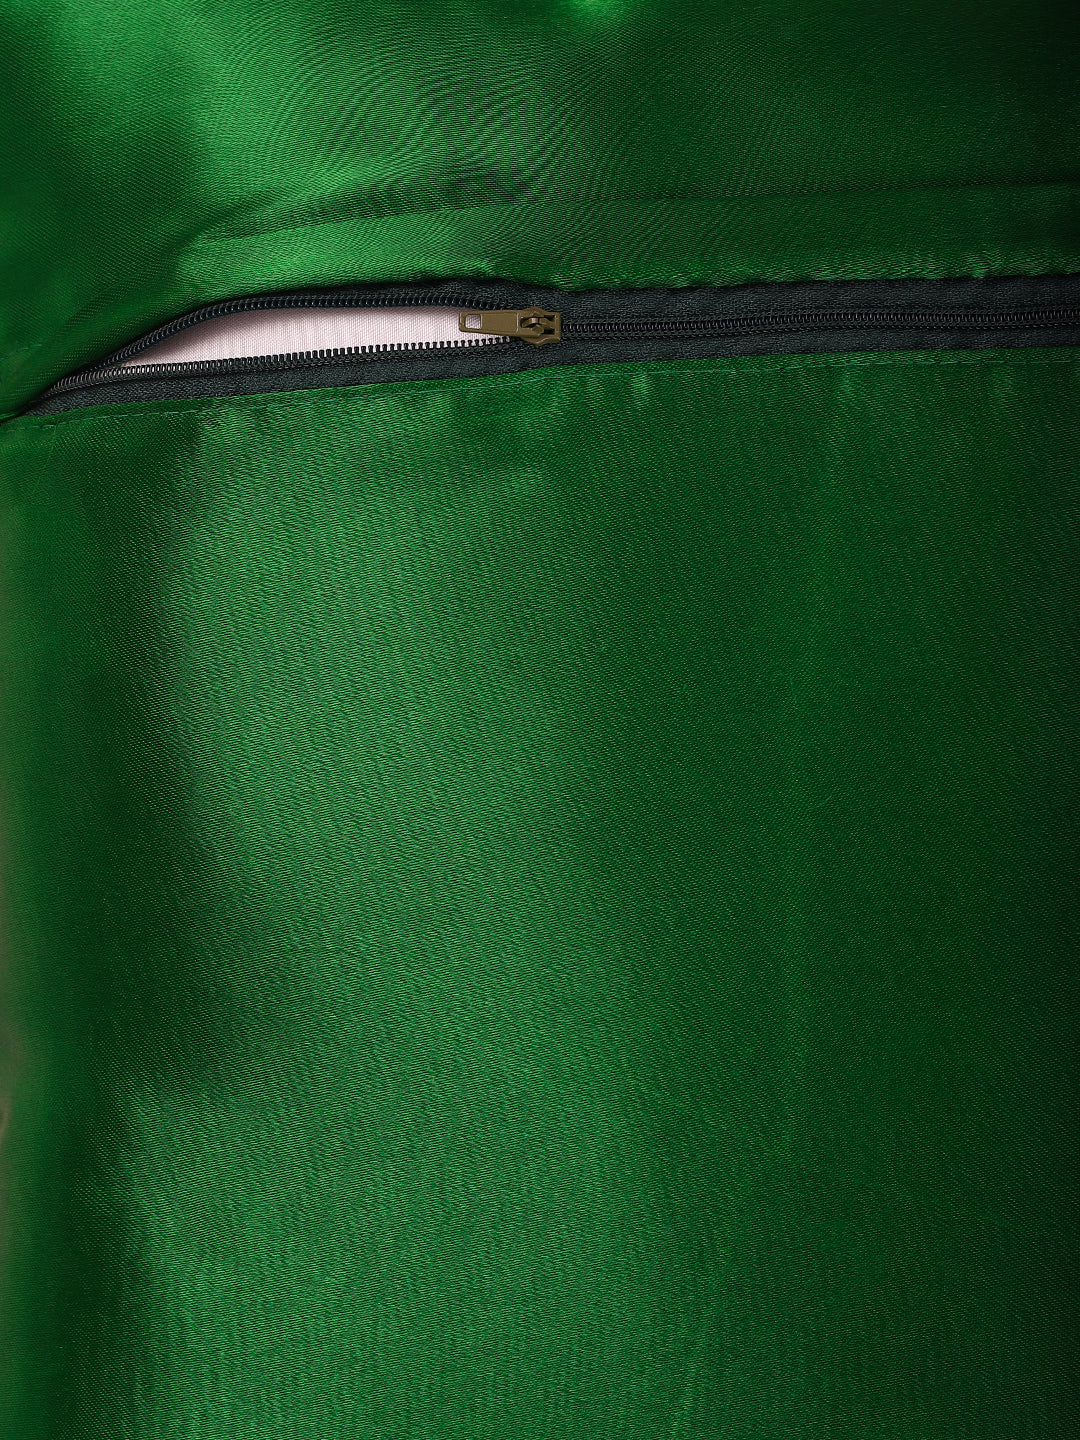 Silkfab Set 0f 5 Decorative Silk Cushion Covers (16x16) Paisley Green - SILKFAB